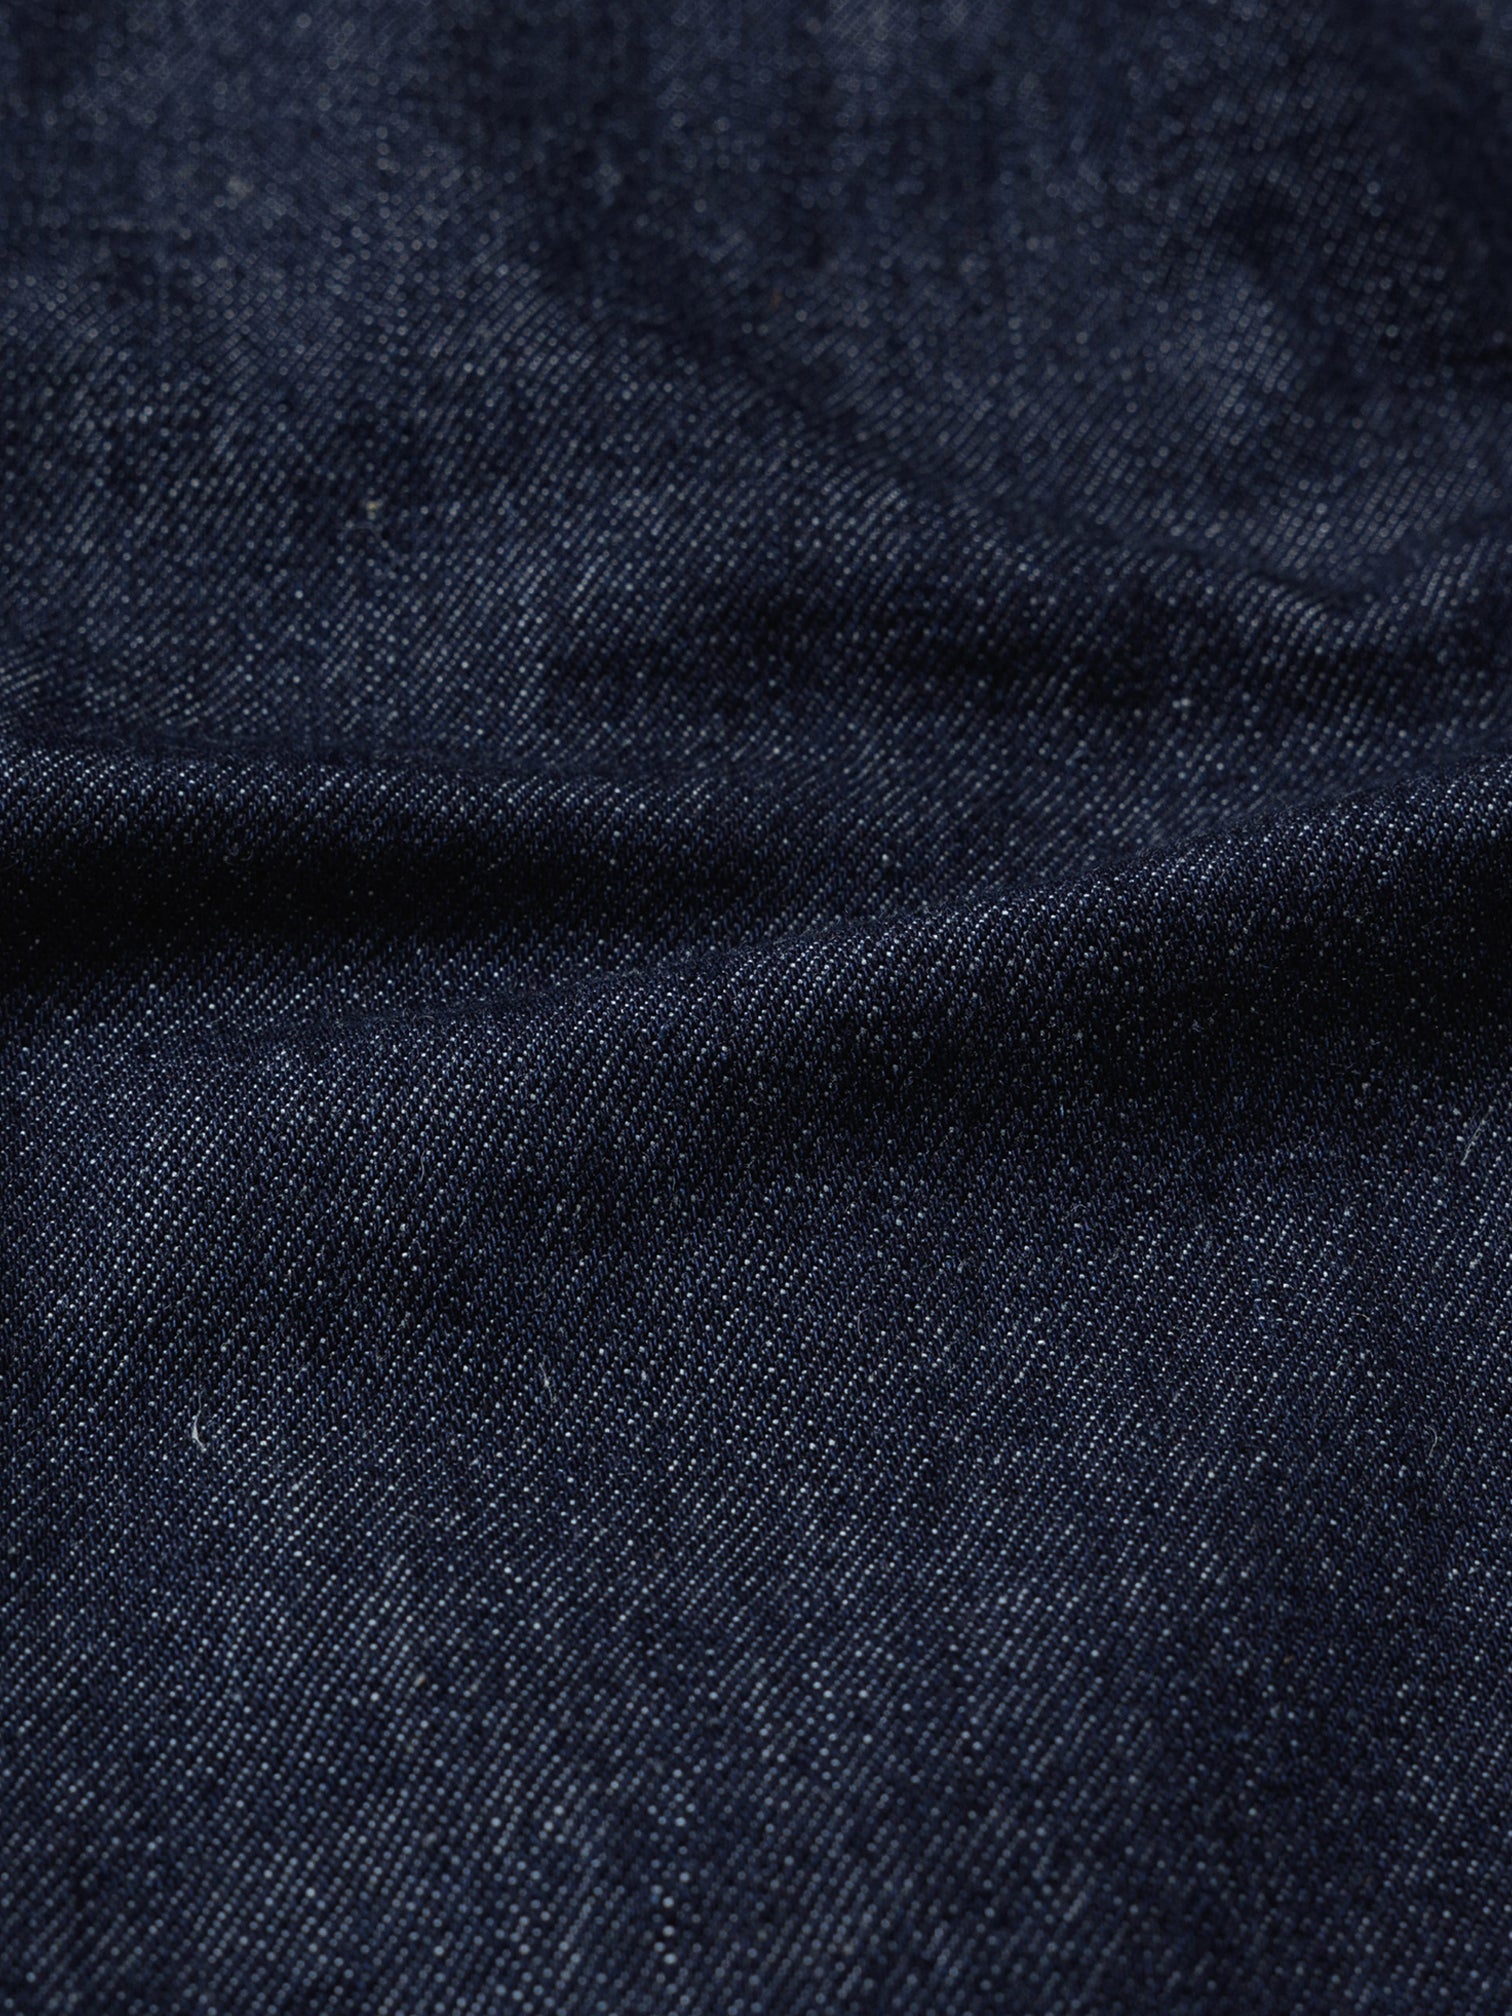 8oz Washed Denim Light Blue | Textile Express | Buy Fabric Online